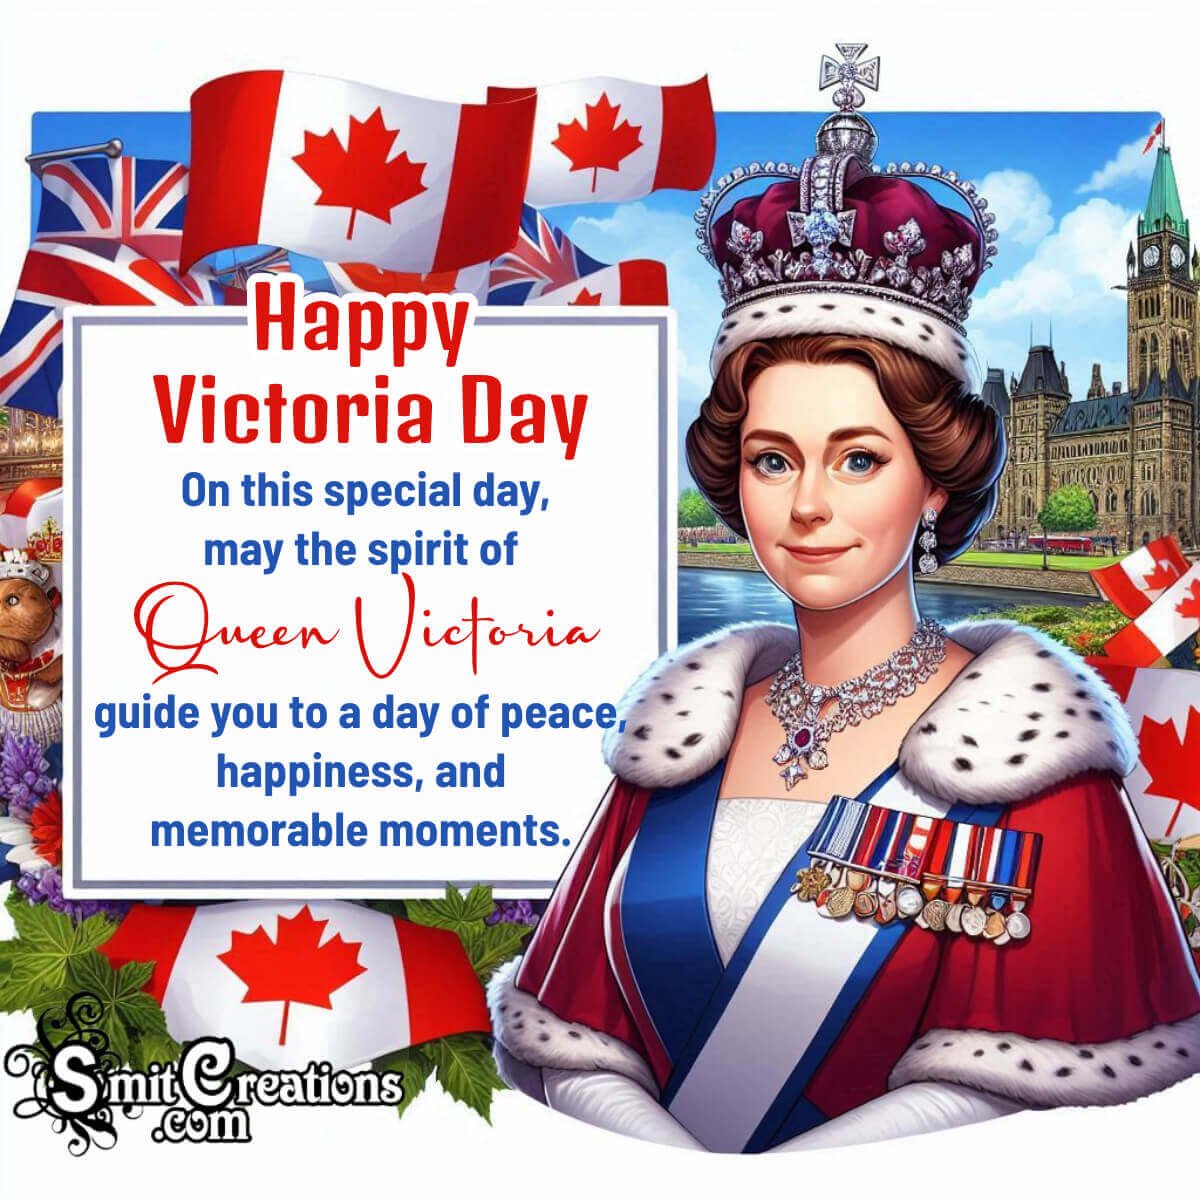 Happy Victoria Day Message Image